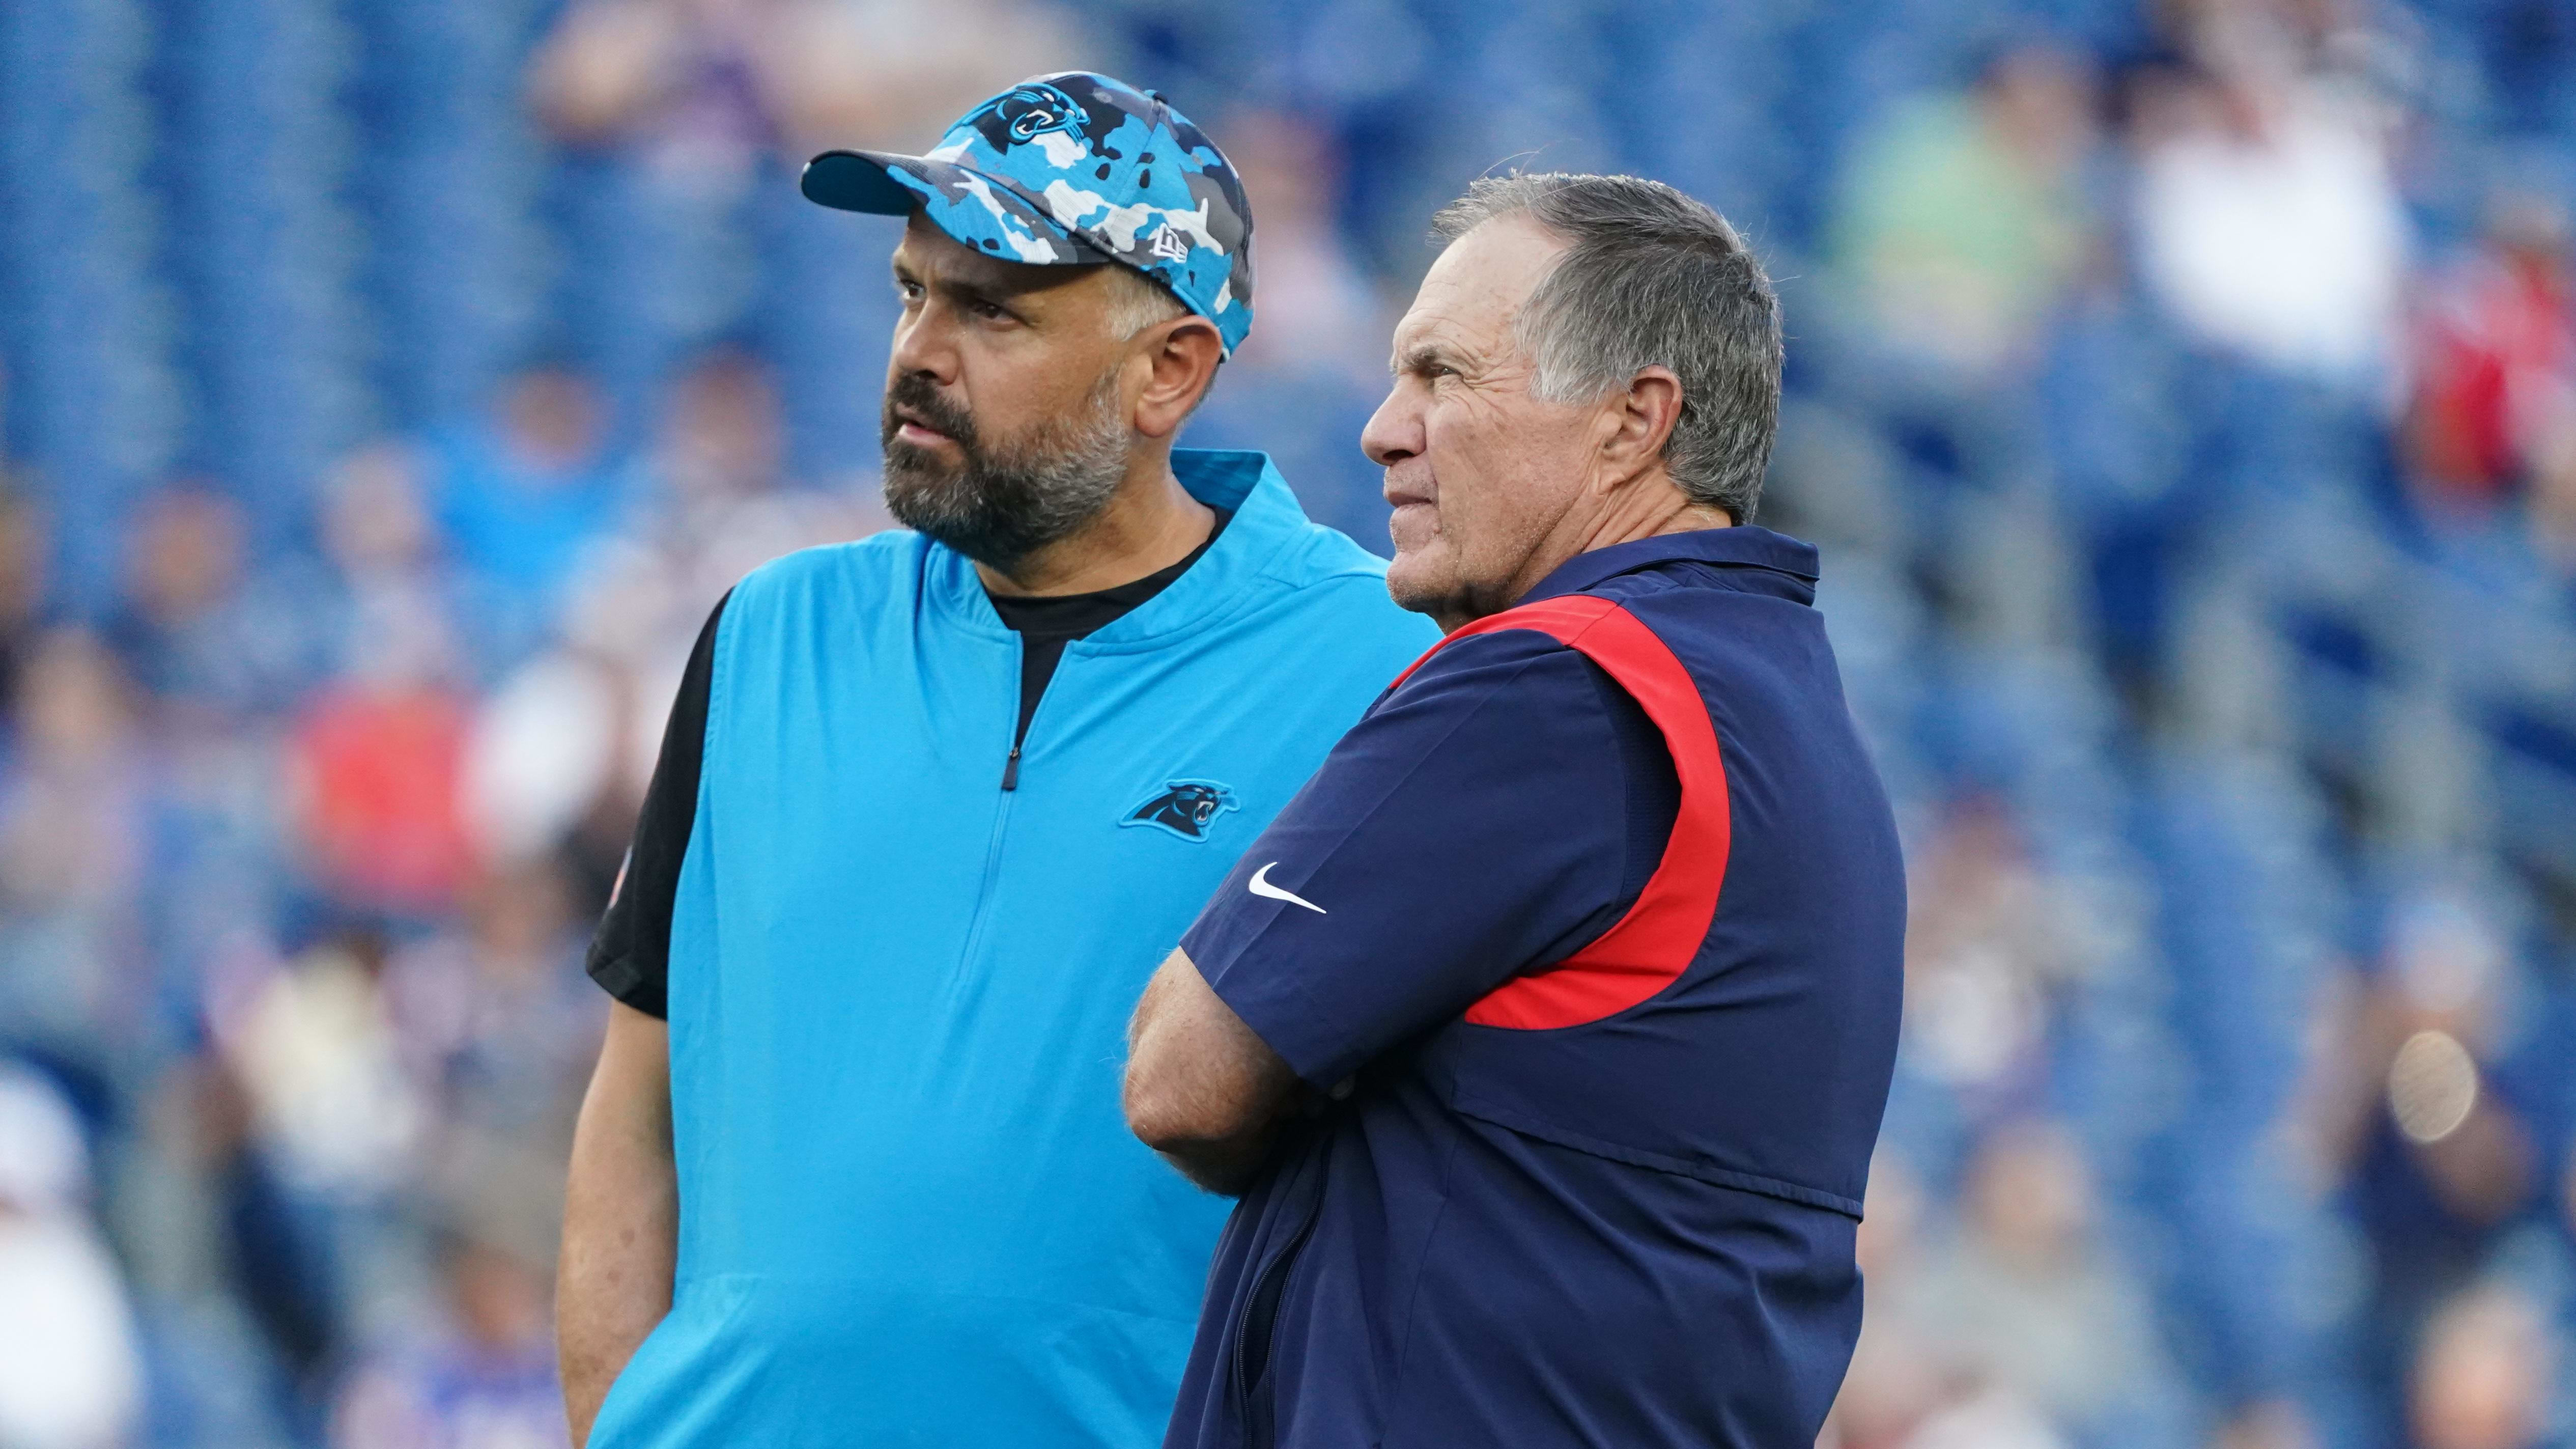 Former Carolina Panthers coach Matt Rhule and former New England Patriots coach Bill Belichick.